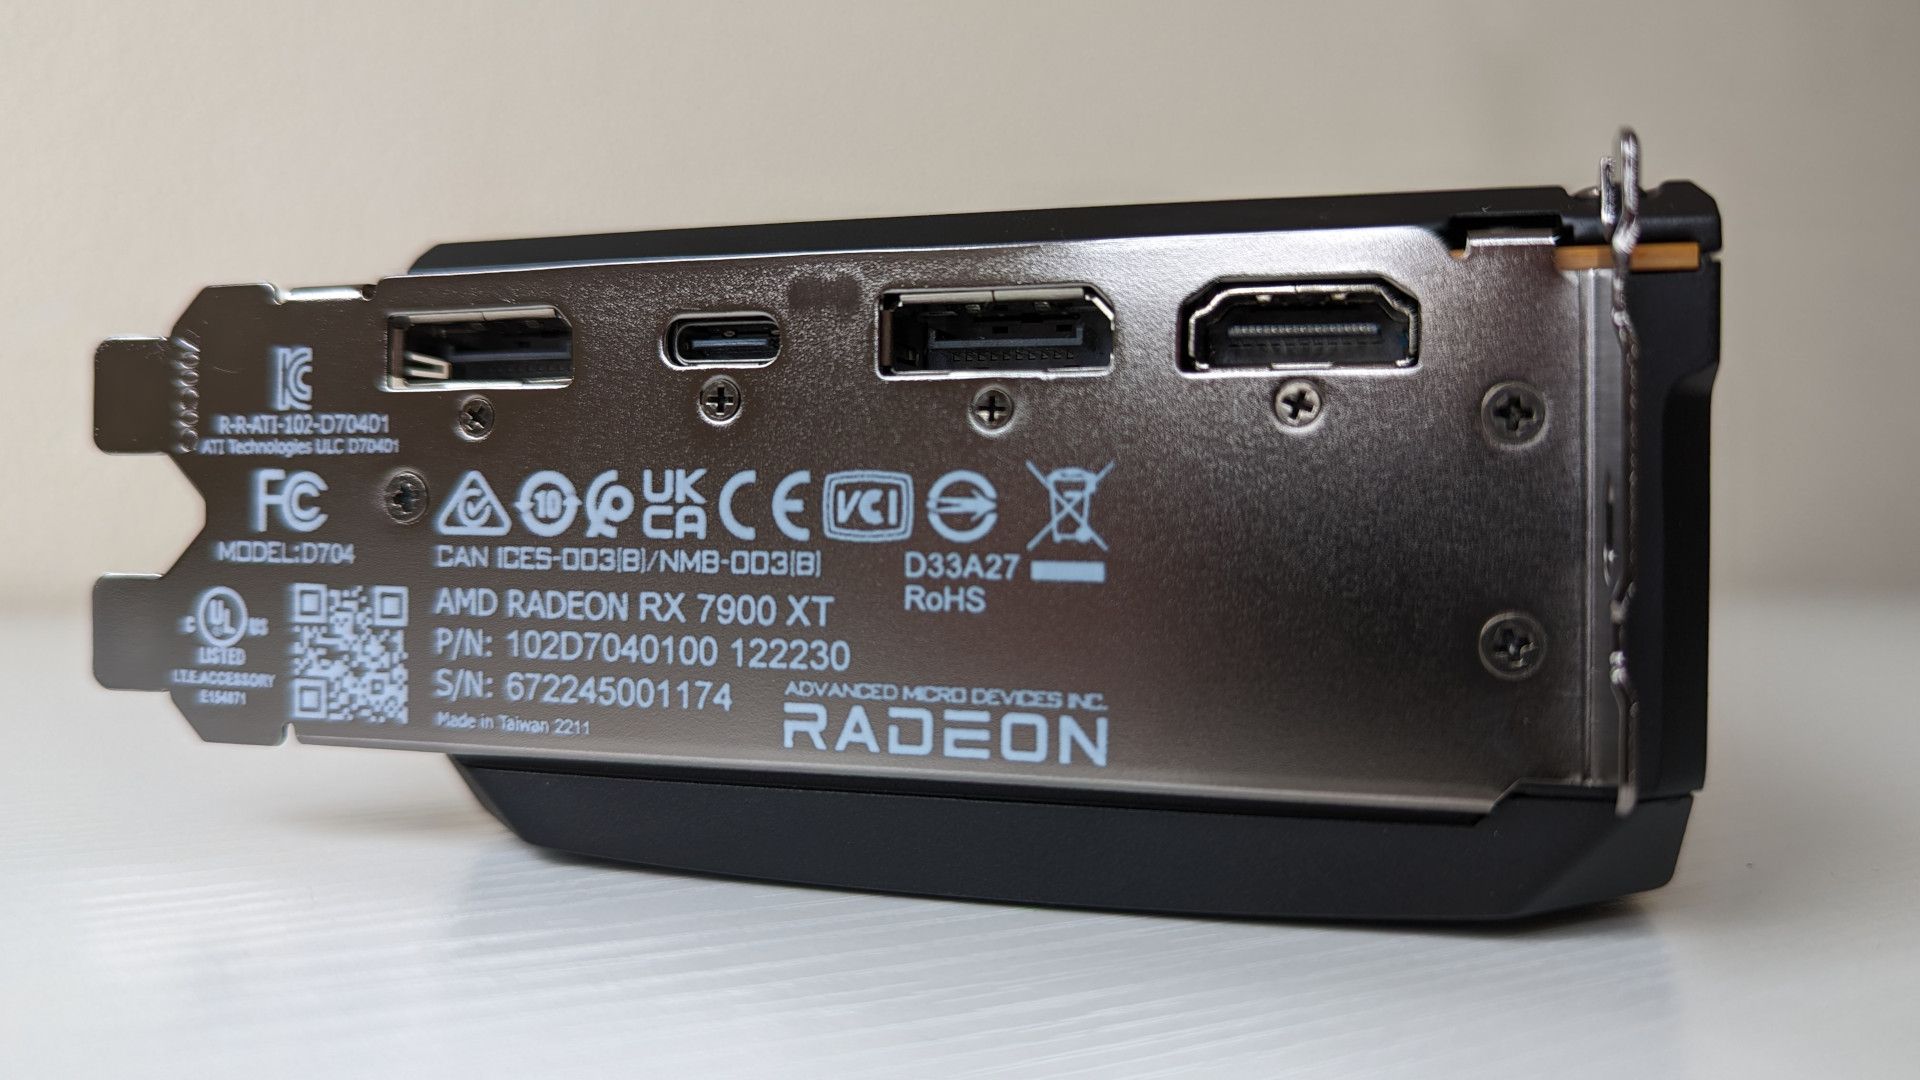 The display inputs of the AMD Radeon RX 7900 XT